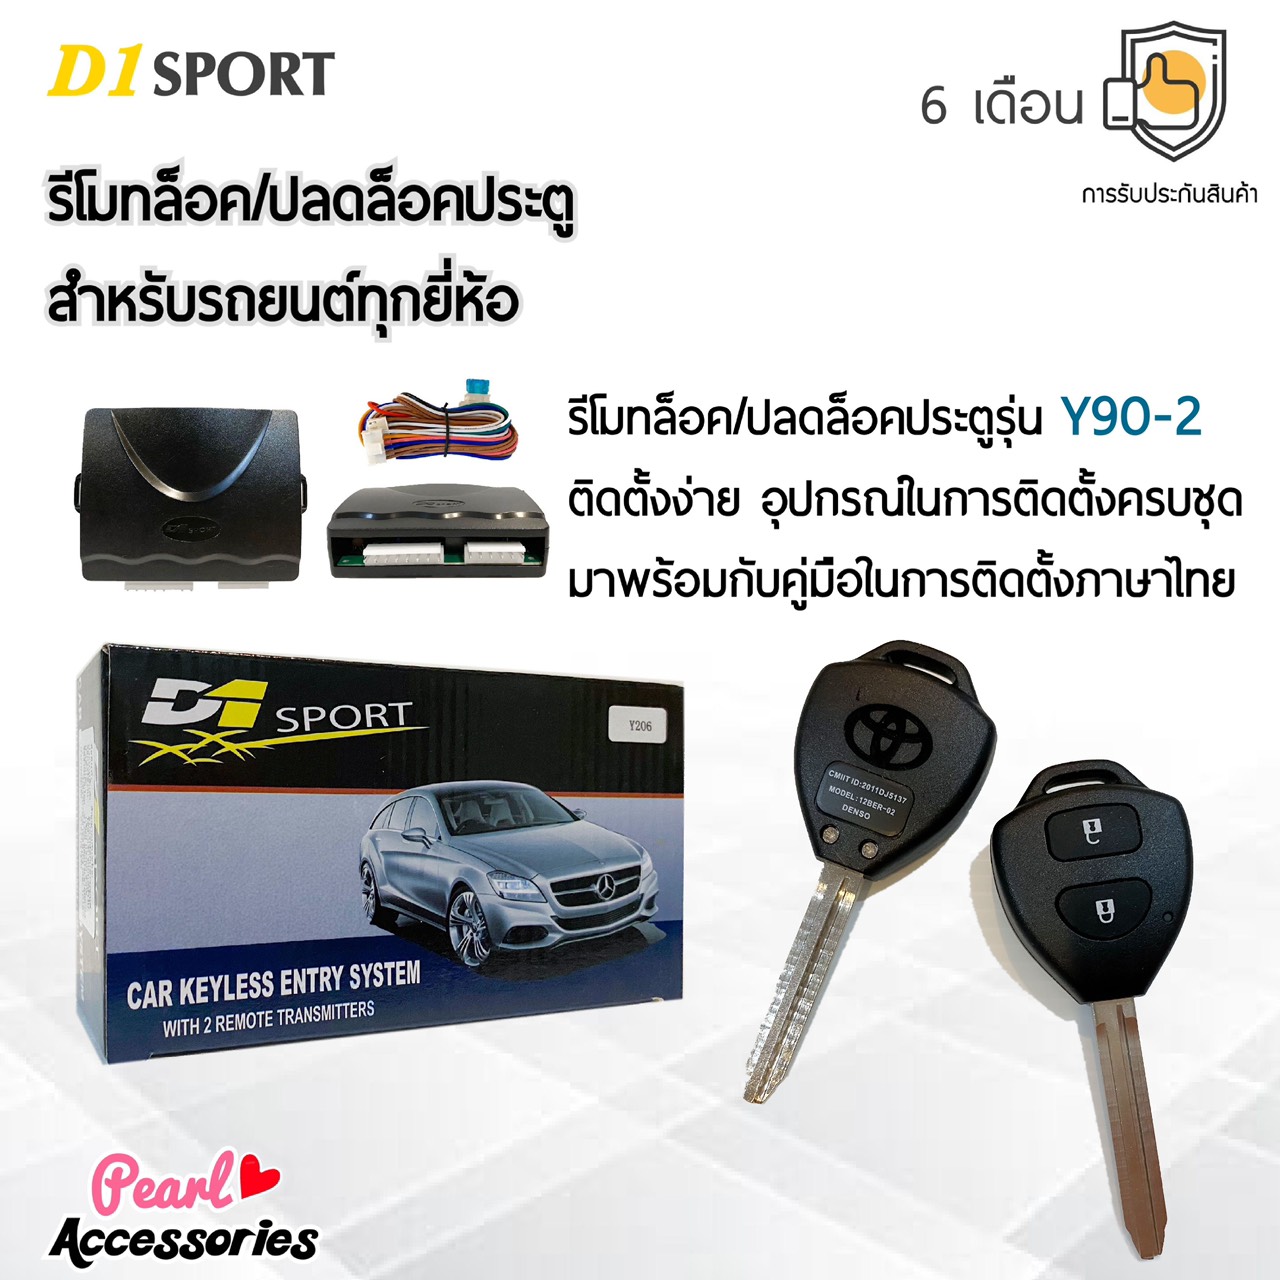 D1 Sport รีโมทล็อค/ปลดล็อคประตูรถยนต์ Y90-2 กุญแจทรง Toyota สำหรับรถยนต์ทุกยี่ห้อ อุปกรณ์ในการติดตั้งครบชุด (คู่มือในการติดตั้งภาษาไทย) Car keyless